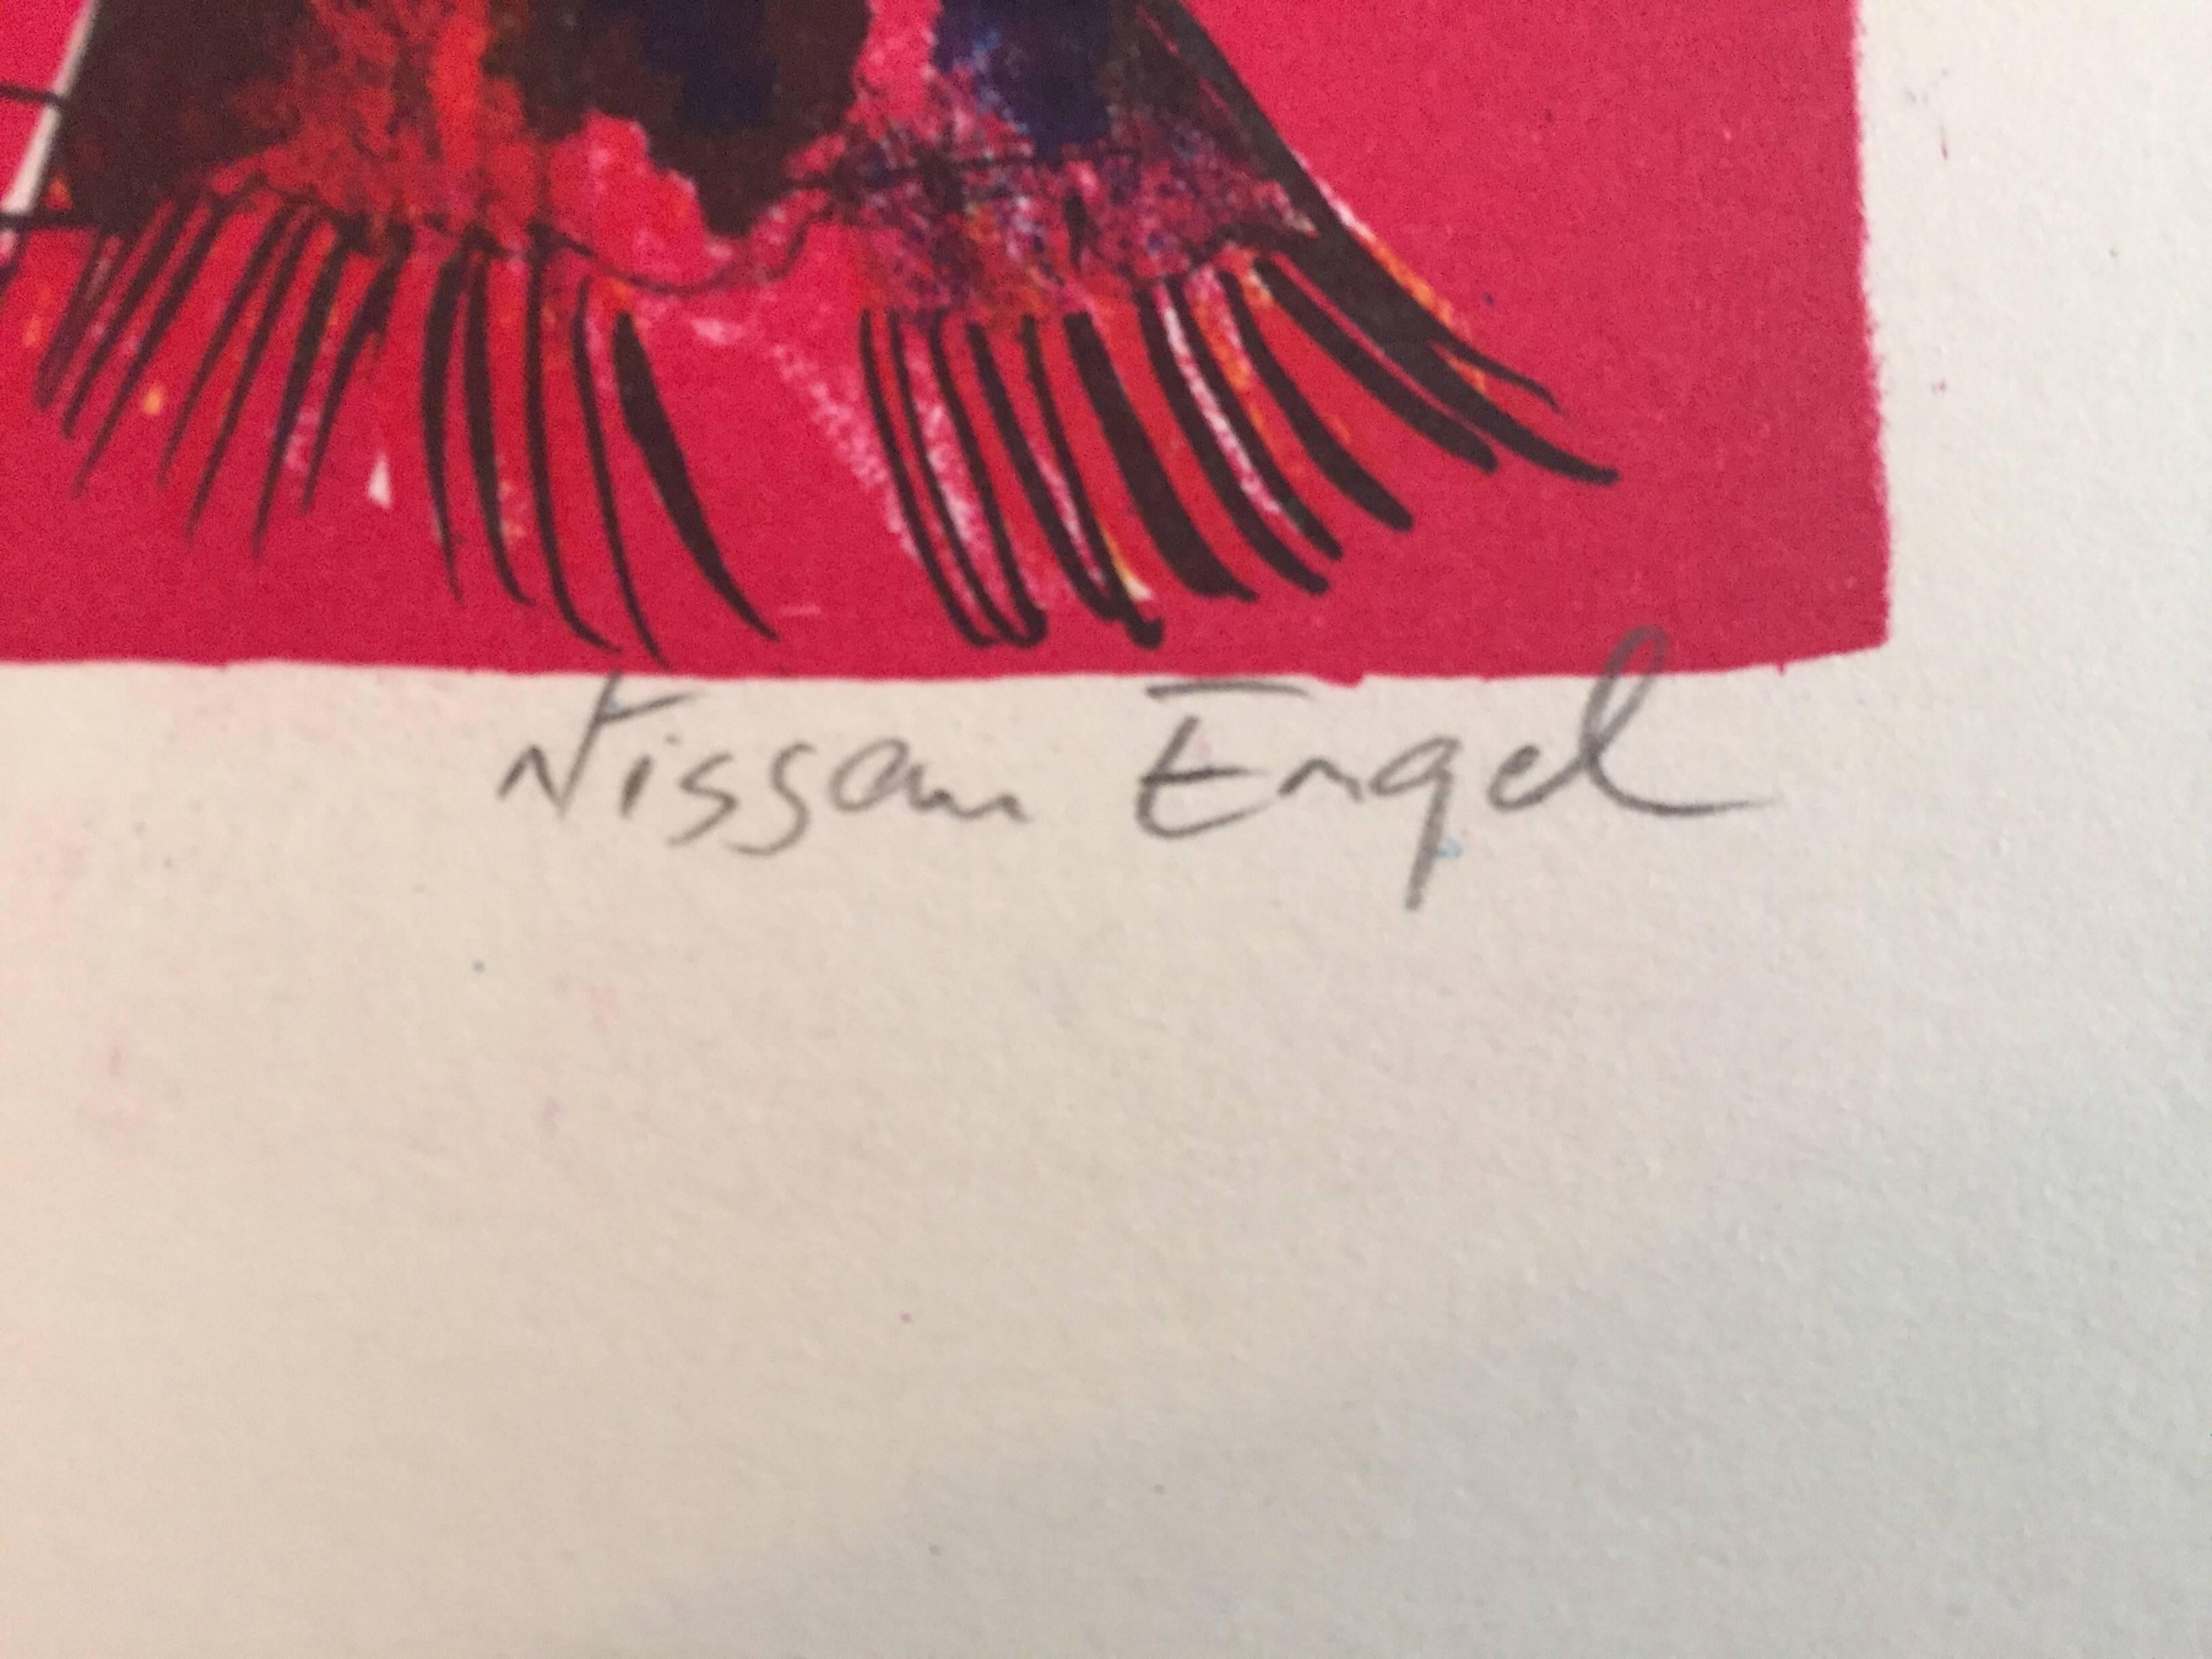 nissan engel signed print